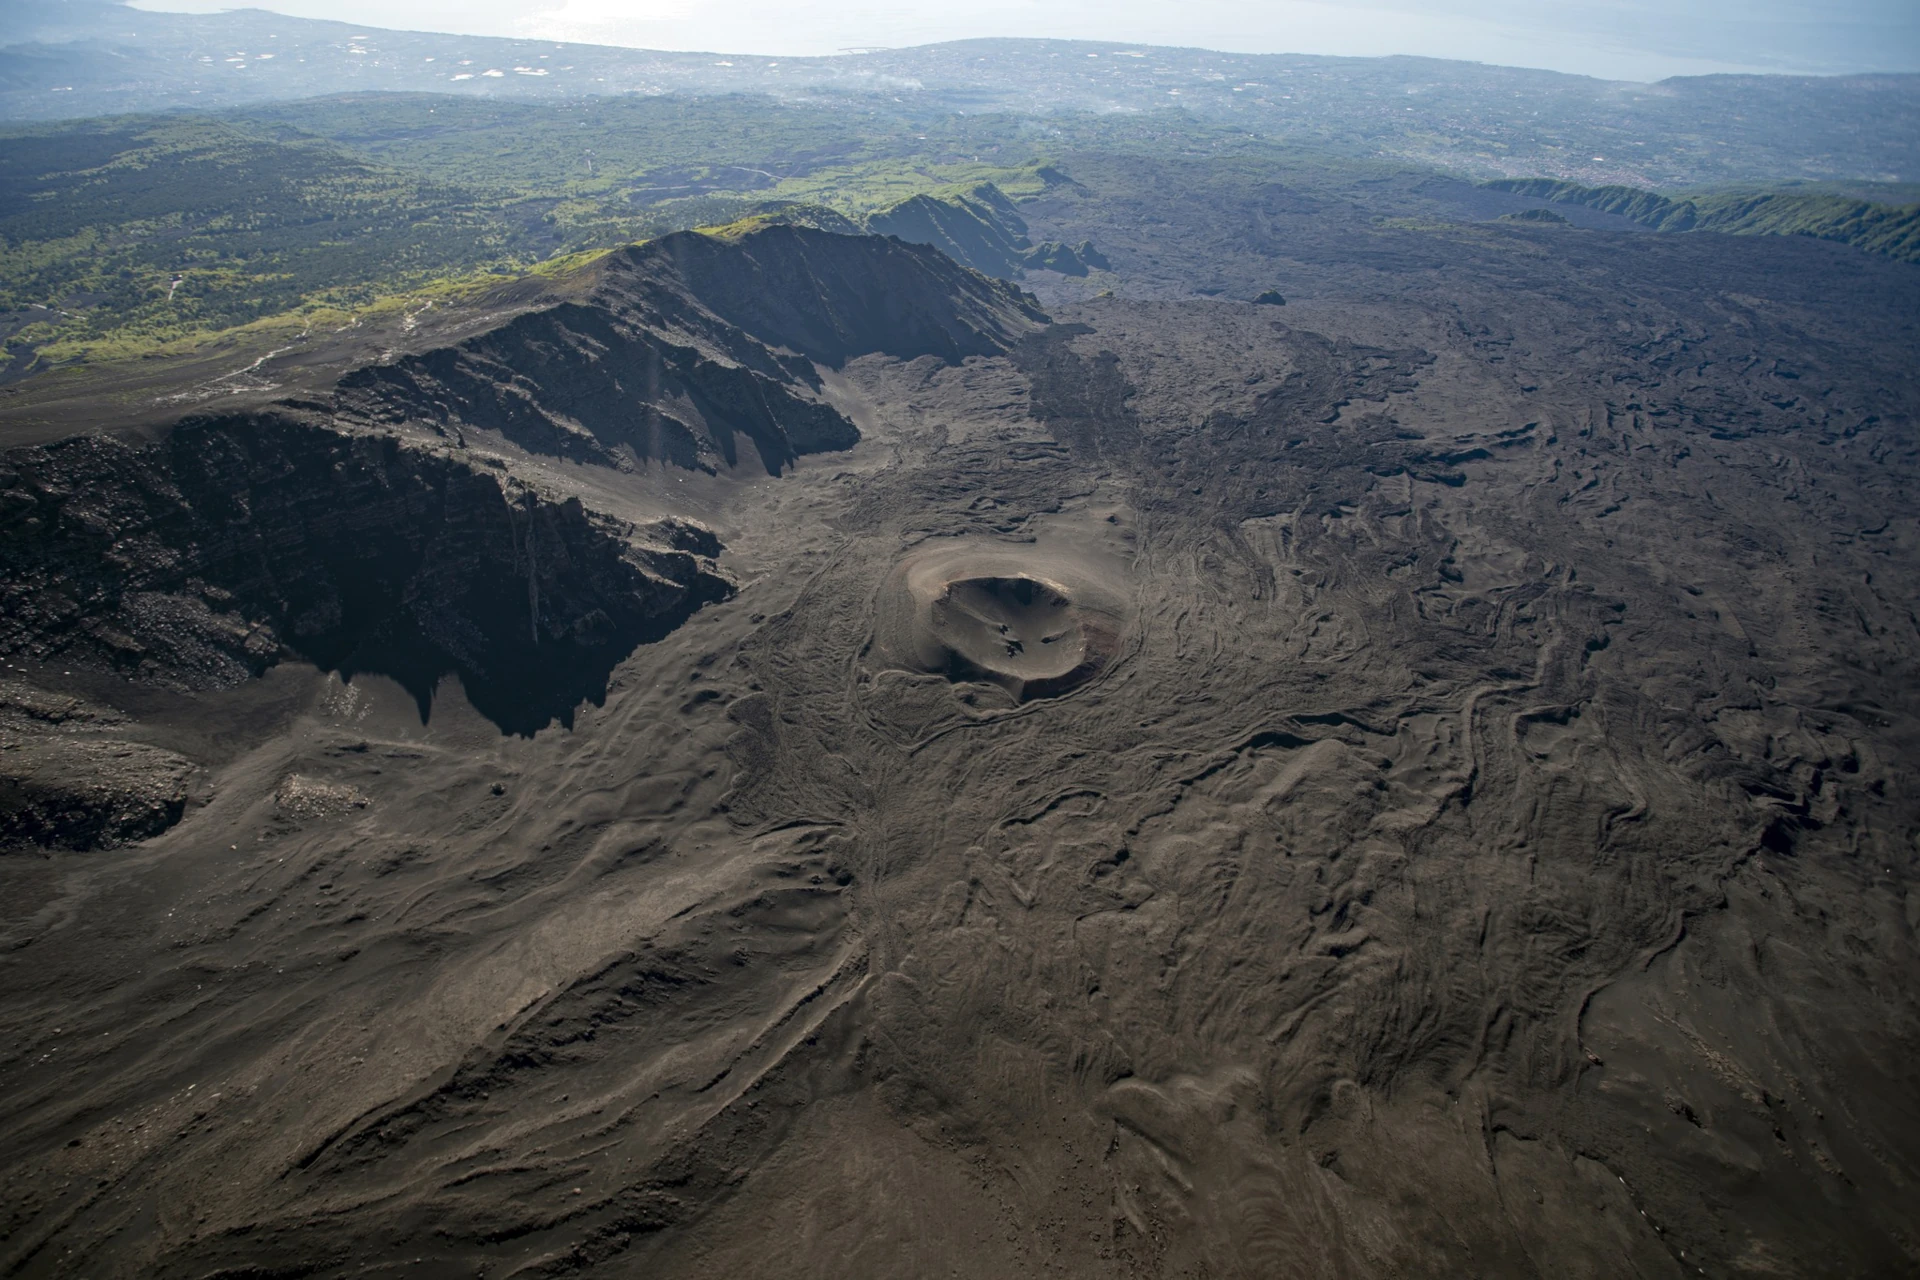 Ontdek de Valle del Bove, één grote lavawoestijn, op onze Etna 3000 tour!